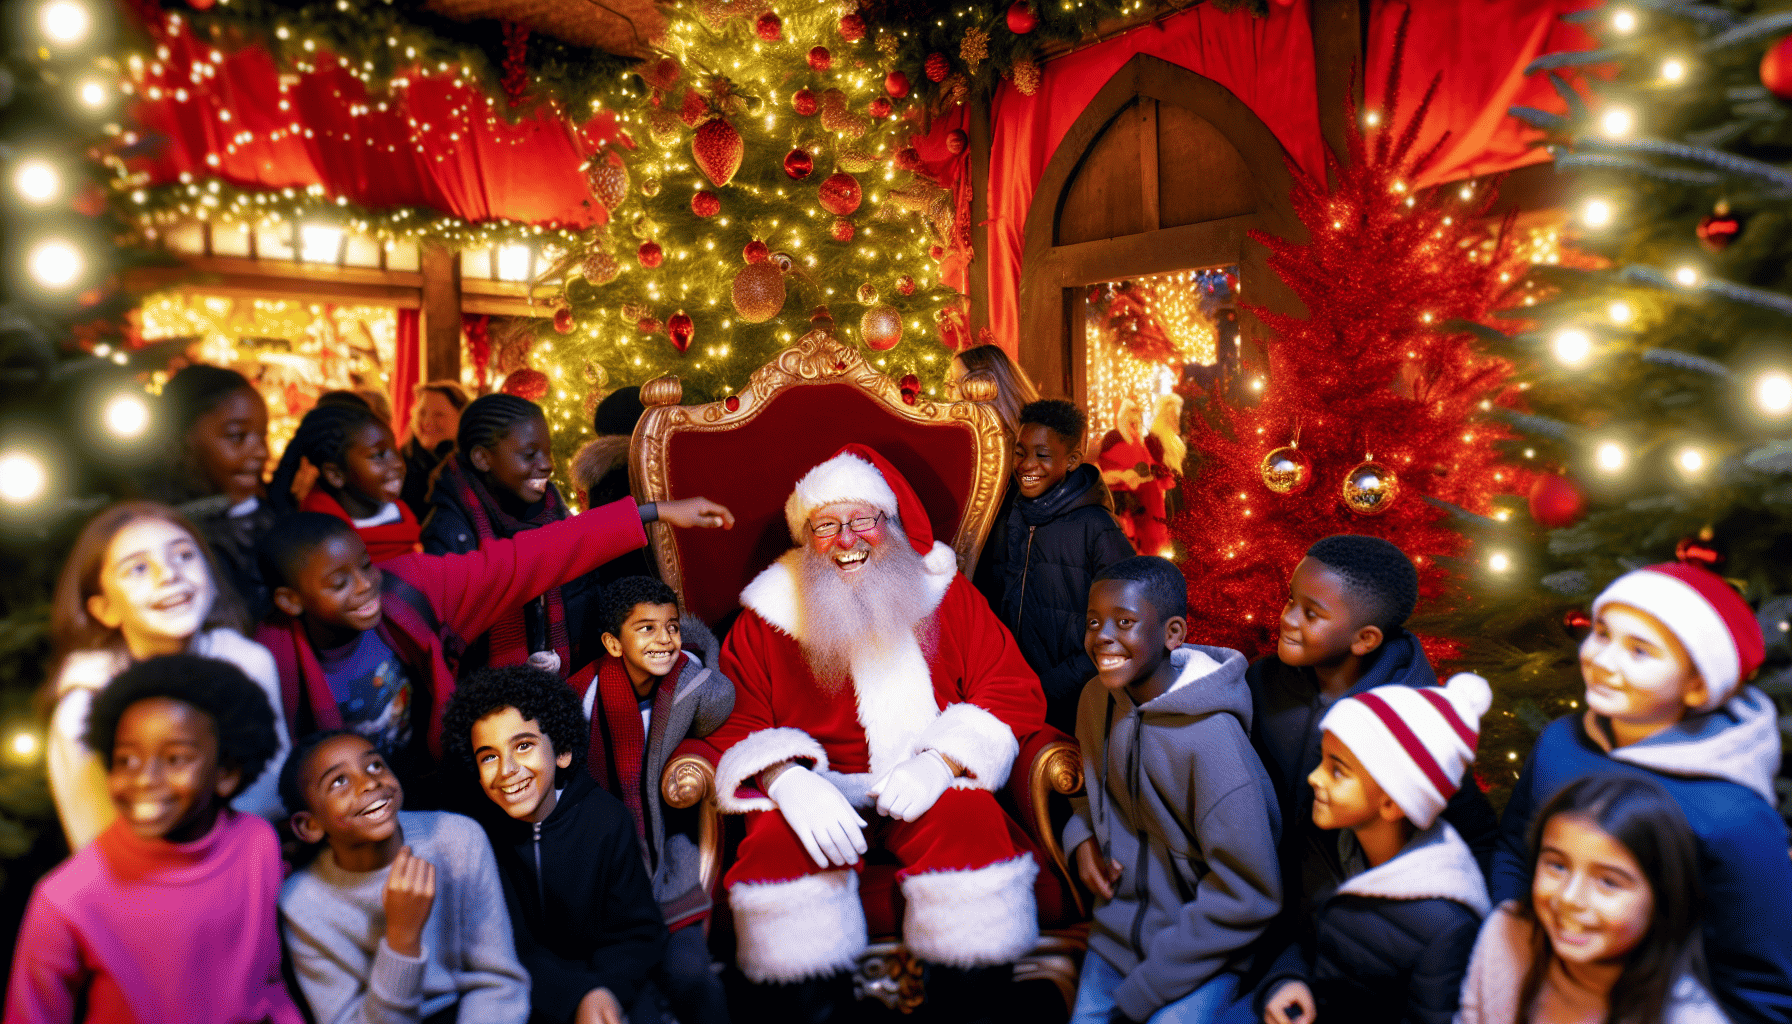 Santa's Grotto with children enjoying festive activities